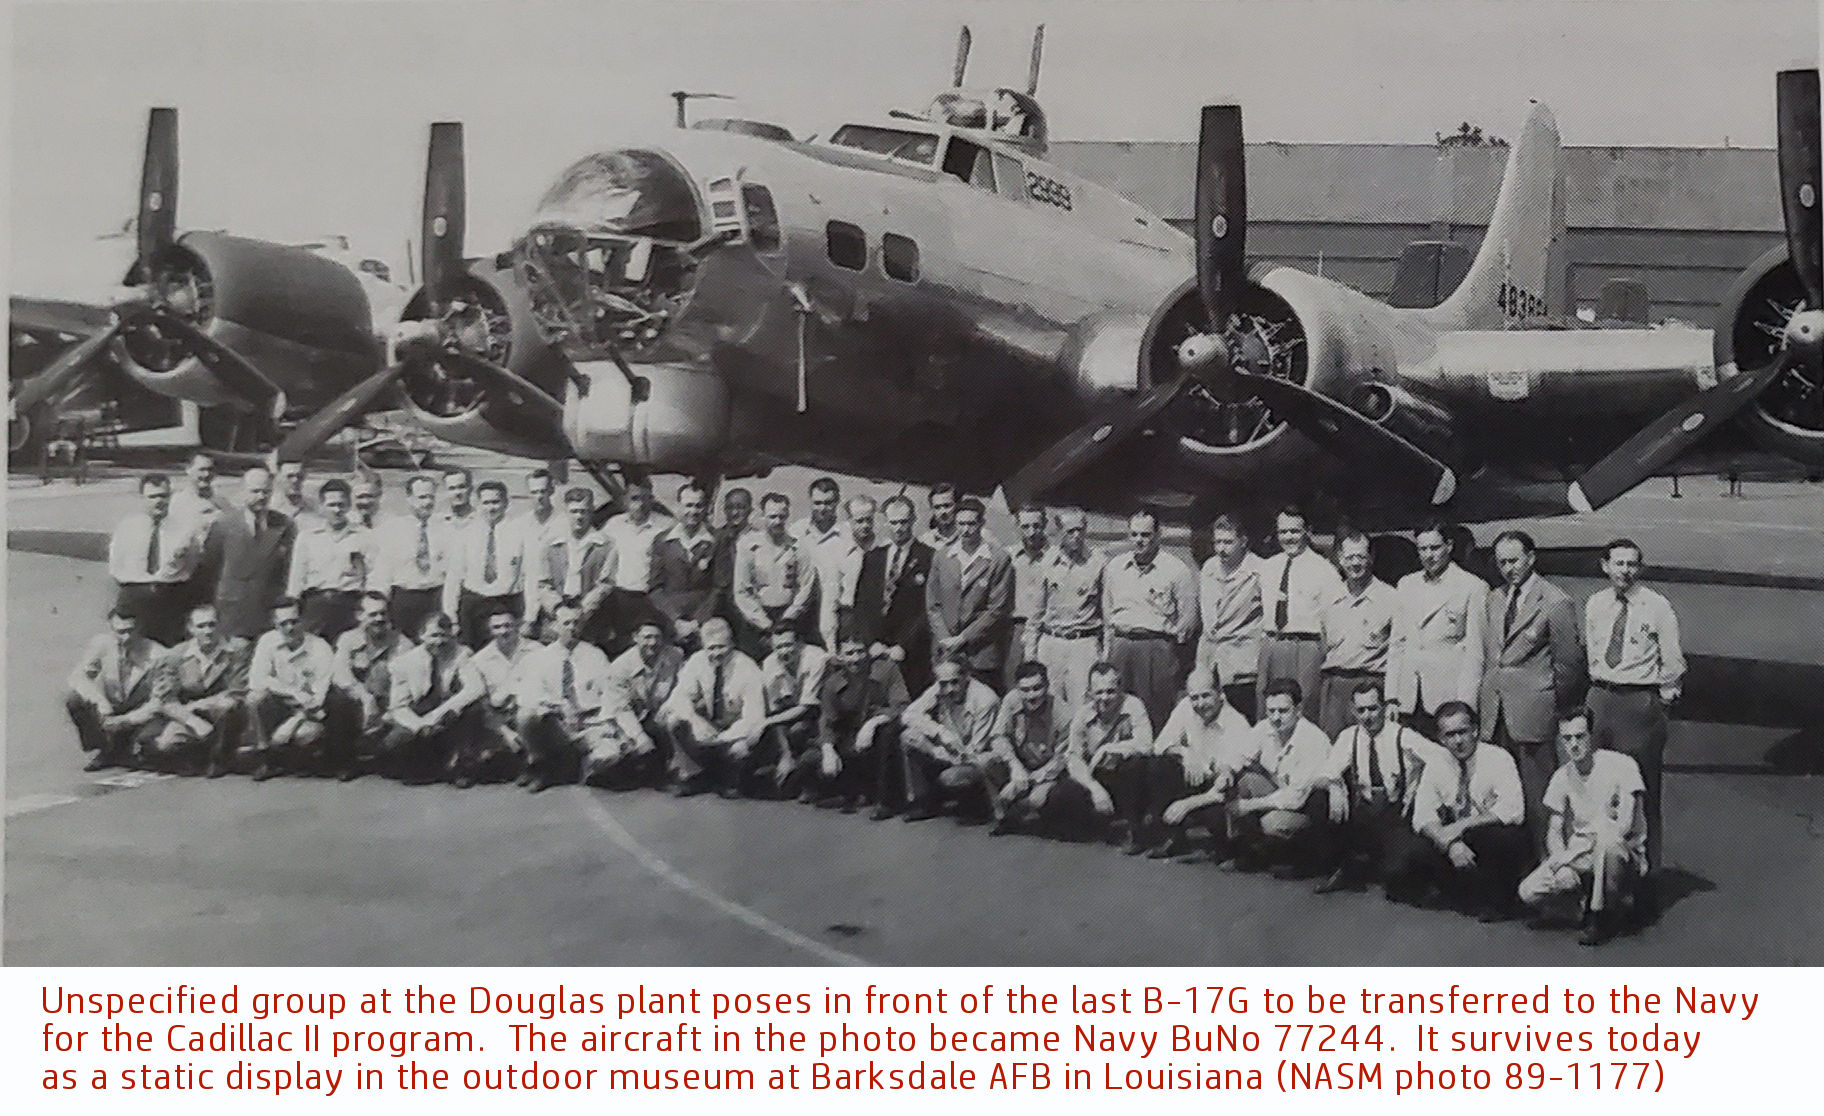 Group photo at Douglas plant